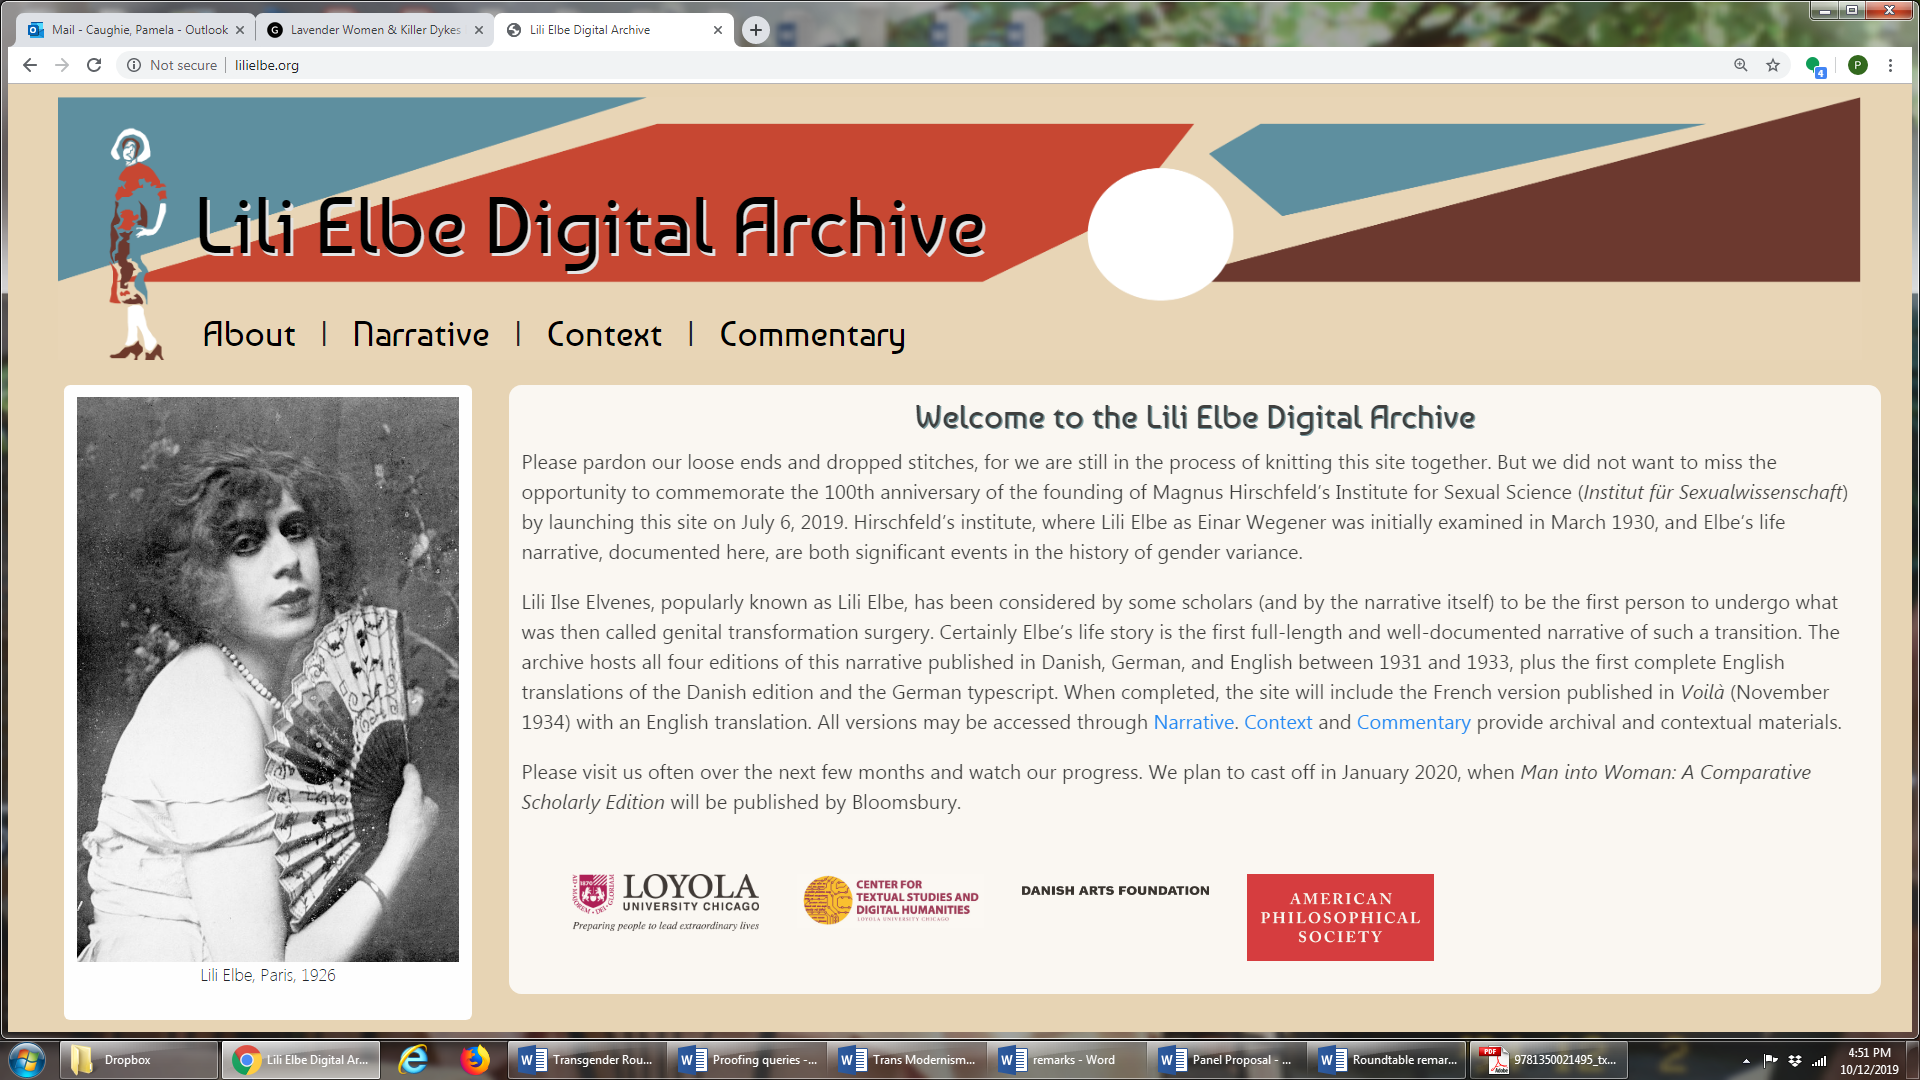 Lili Elbe Digital Archive Launch Celebration